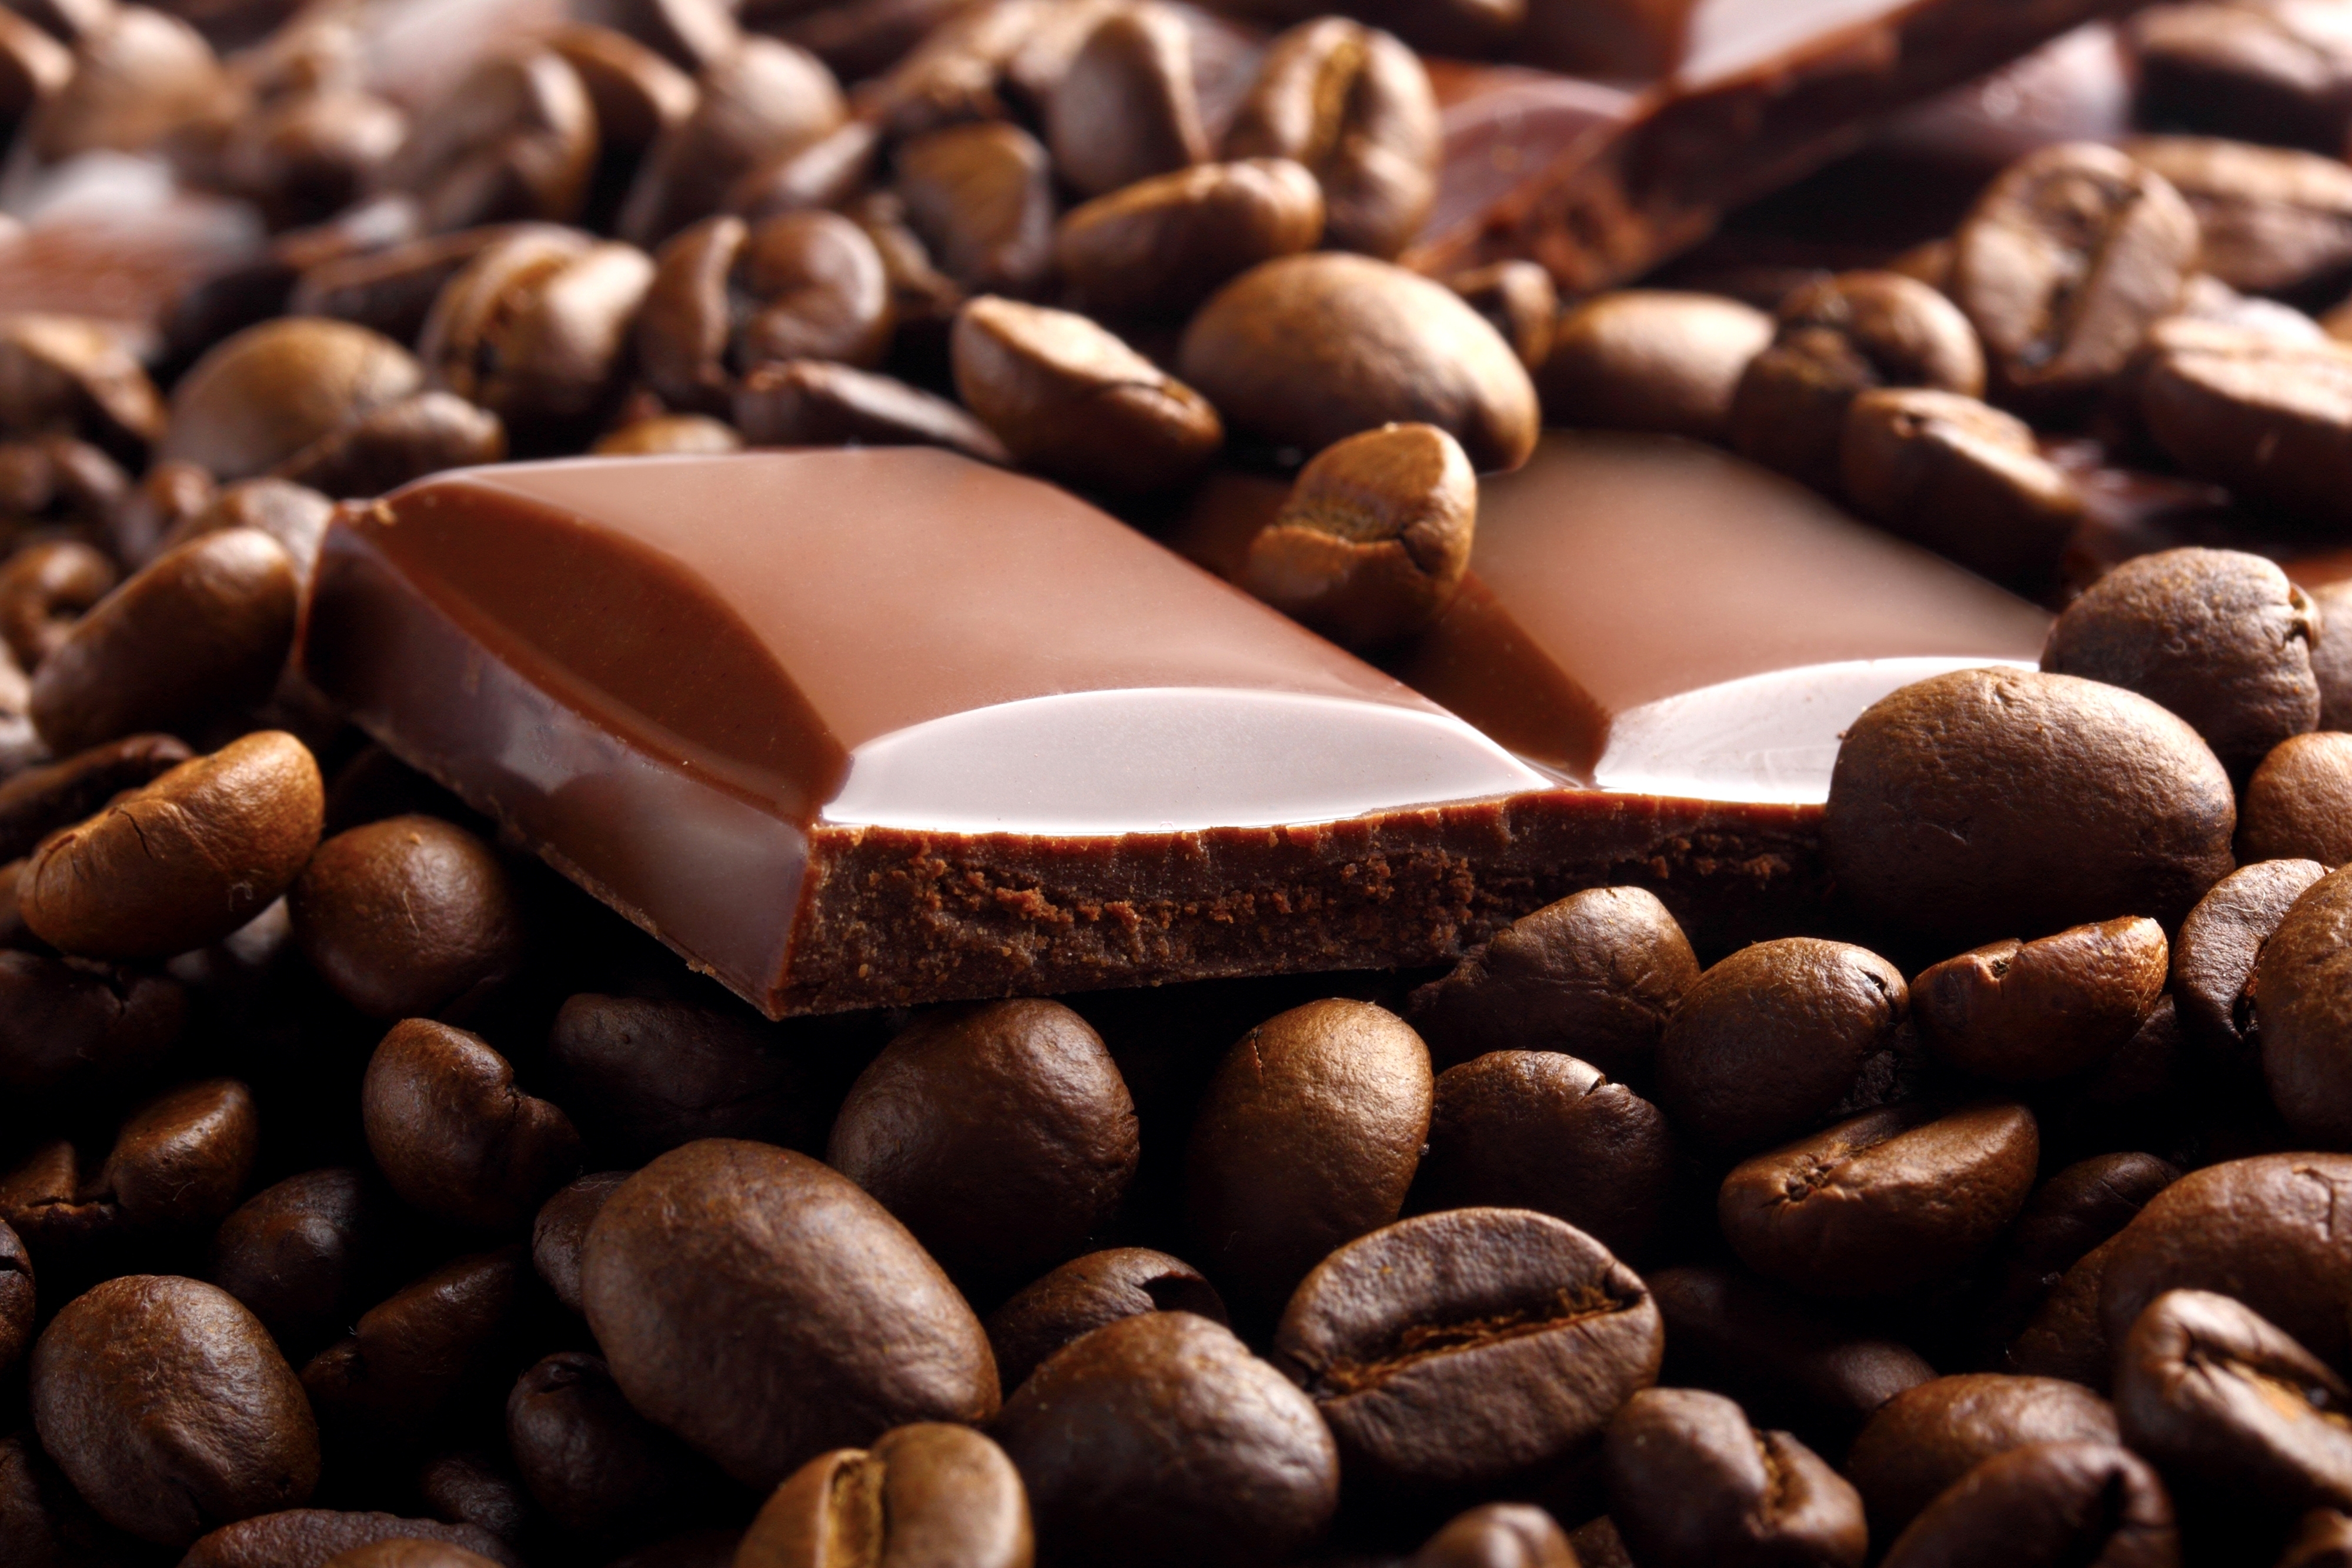 Coffee i chocolate. Кофе и шоколад. Зерна кофе в шоколаде. Кофейный шоколад. Кофейные зерна в шоколаде.